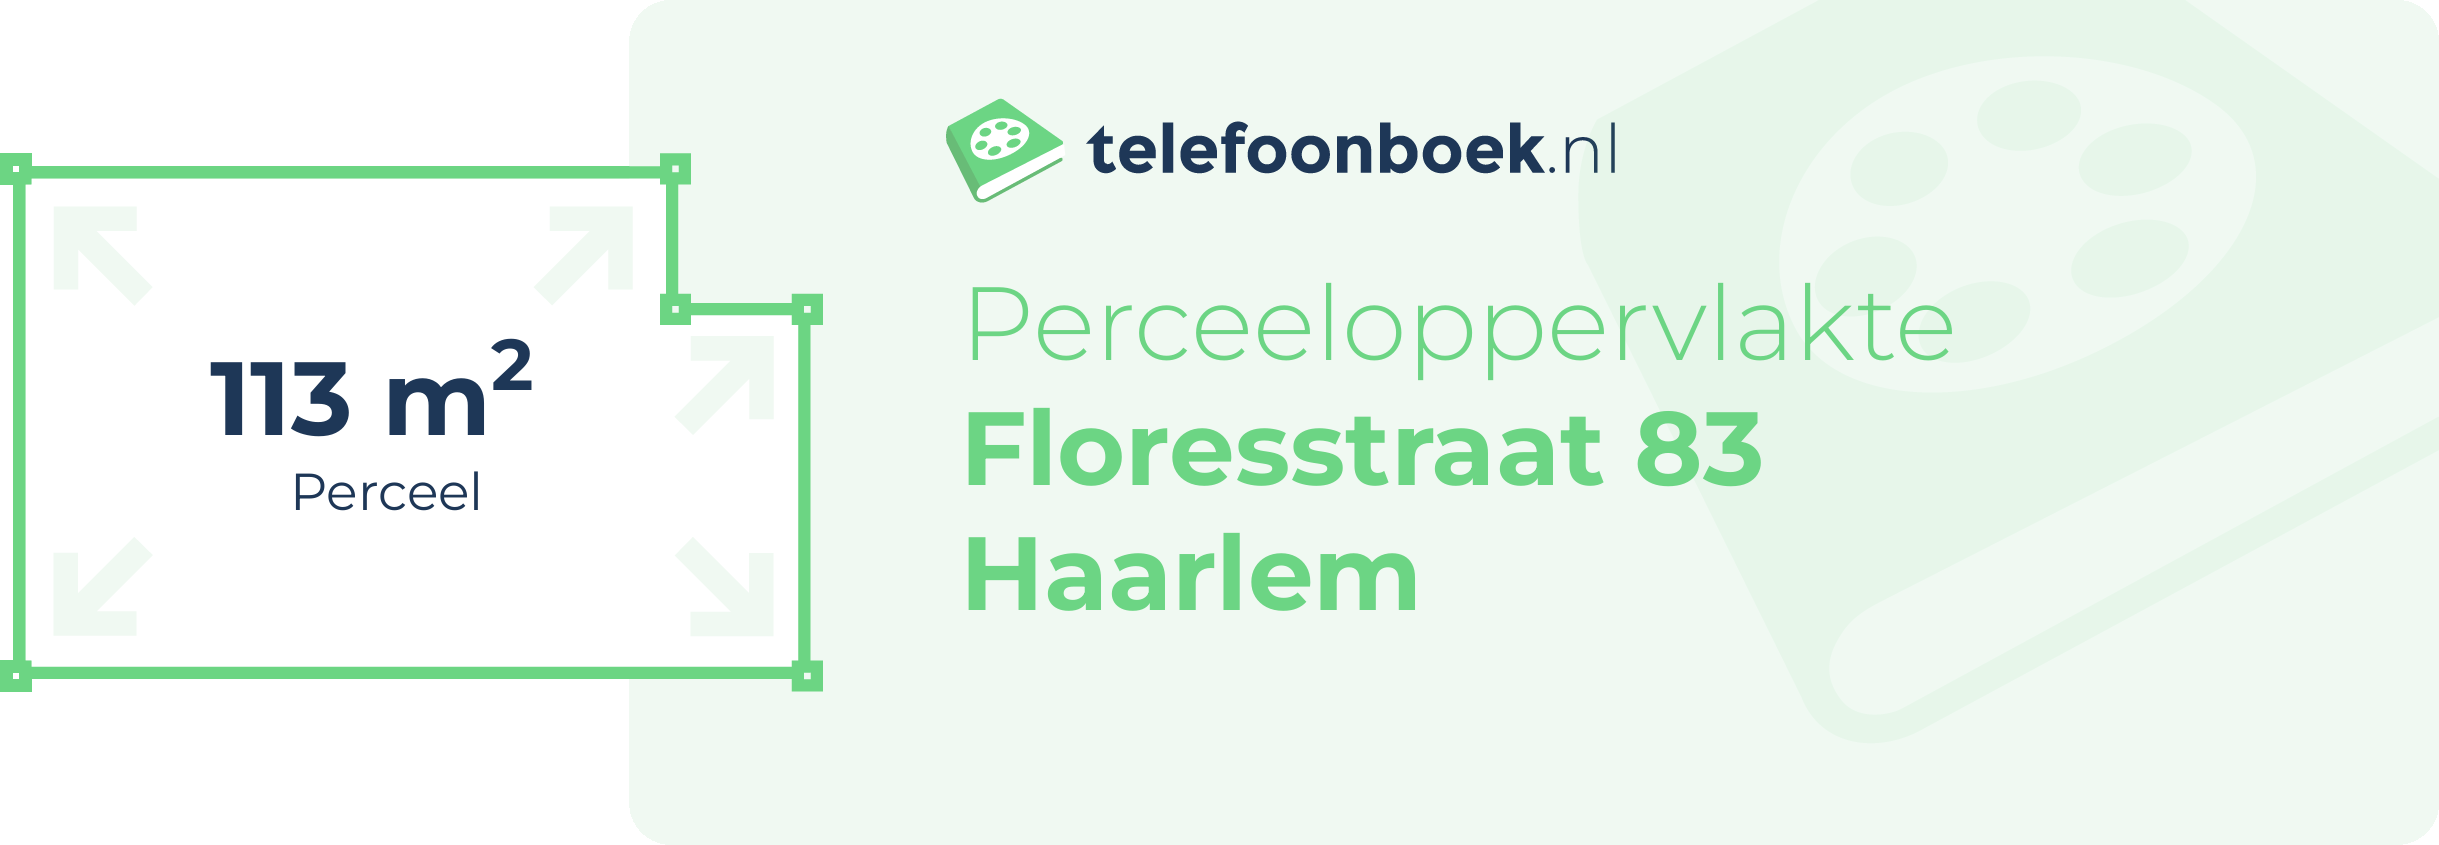 Perceeloppervlakte Floresstraat 83 Haarlem